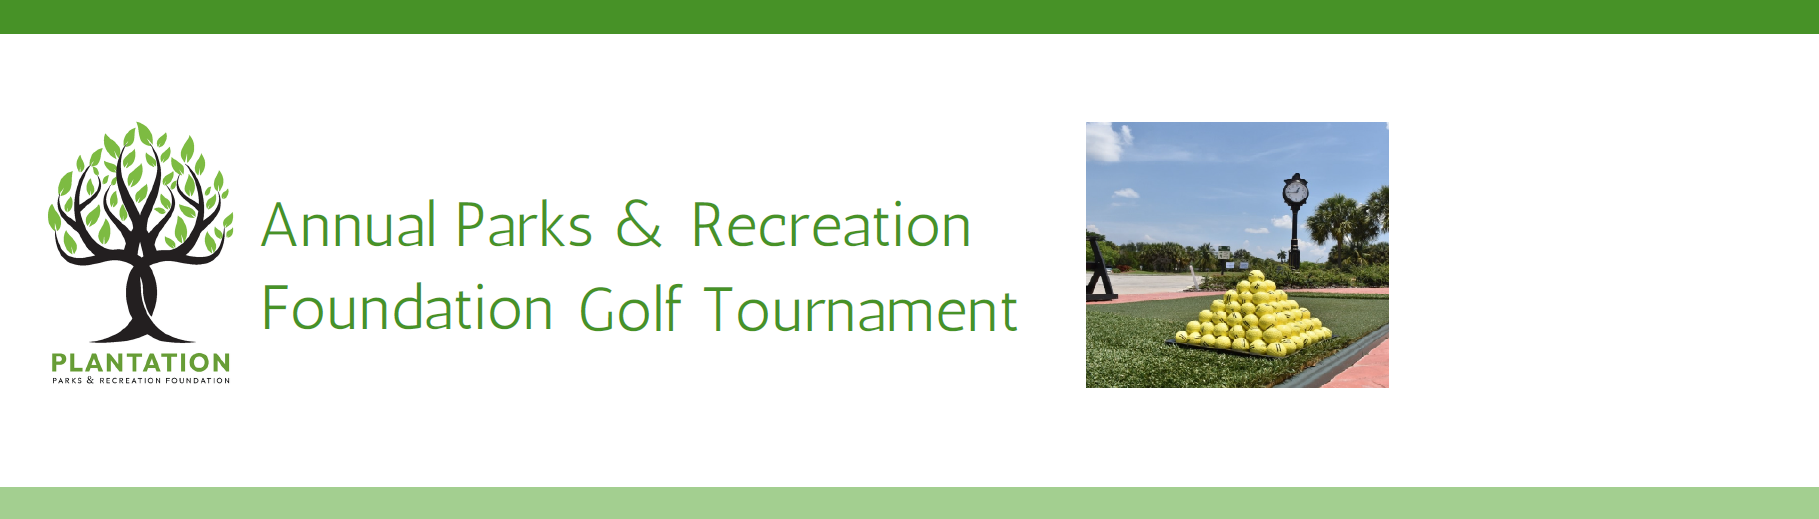 Annual Parks & Recreation Foundation Golf Tournament